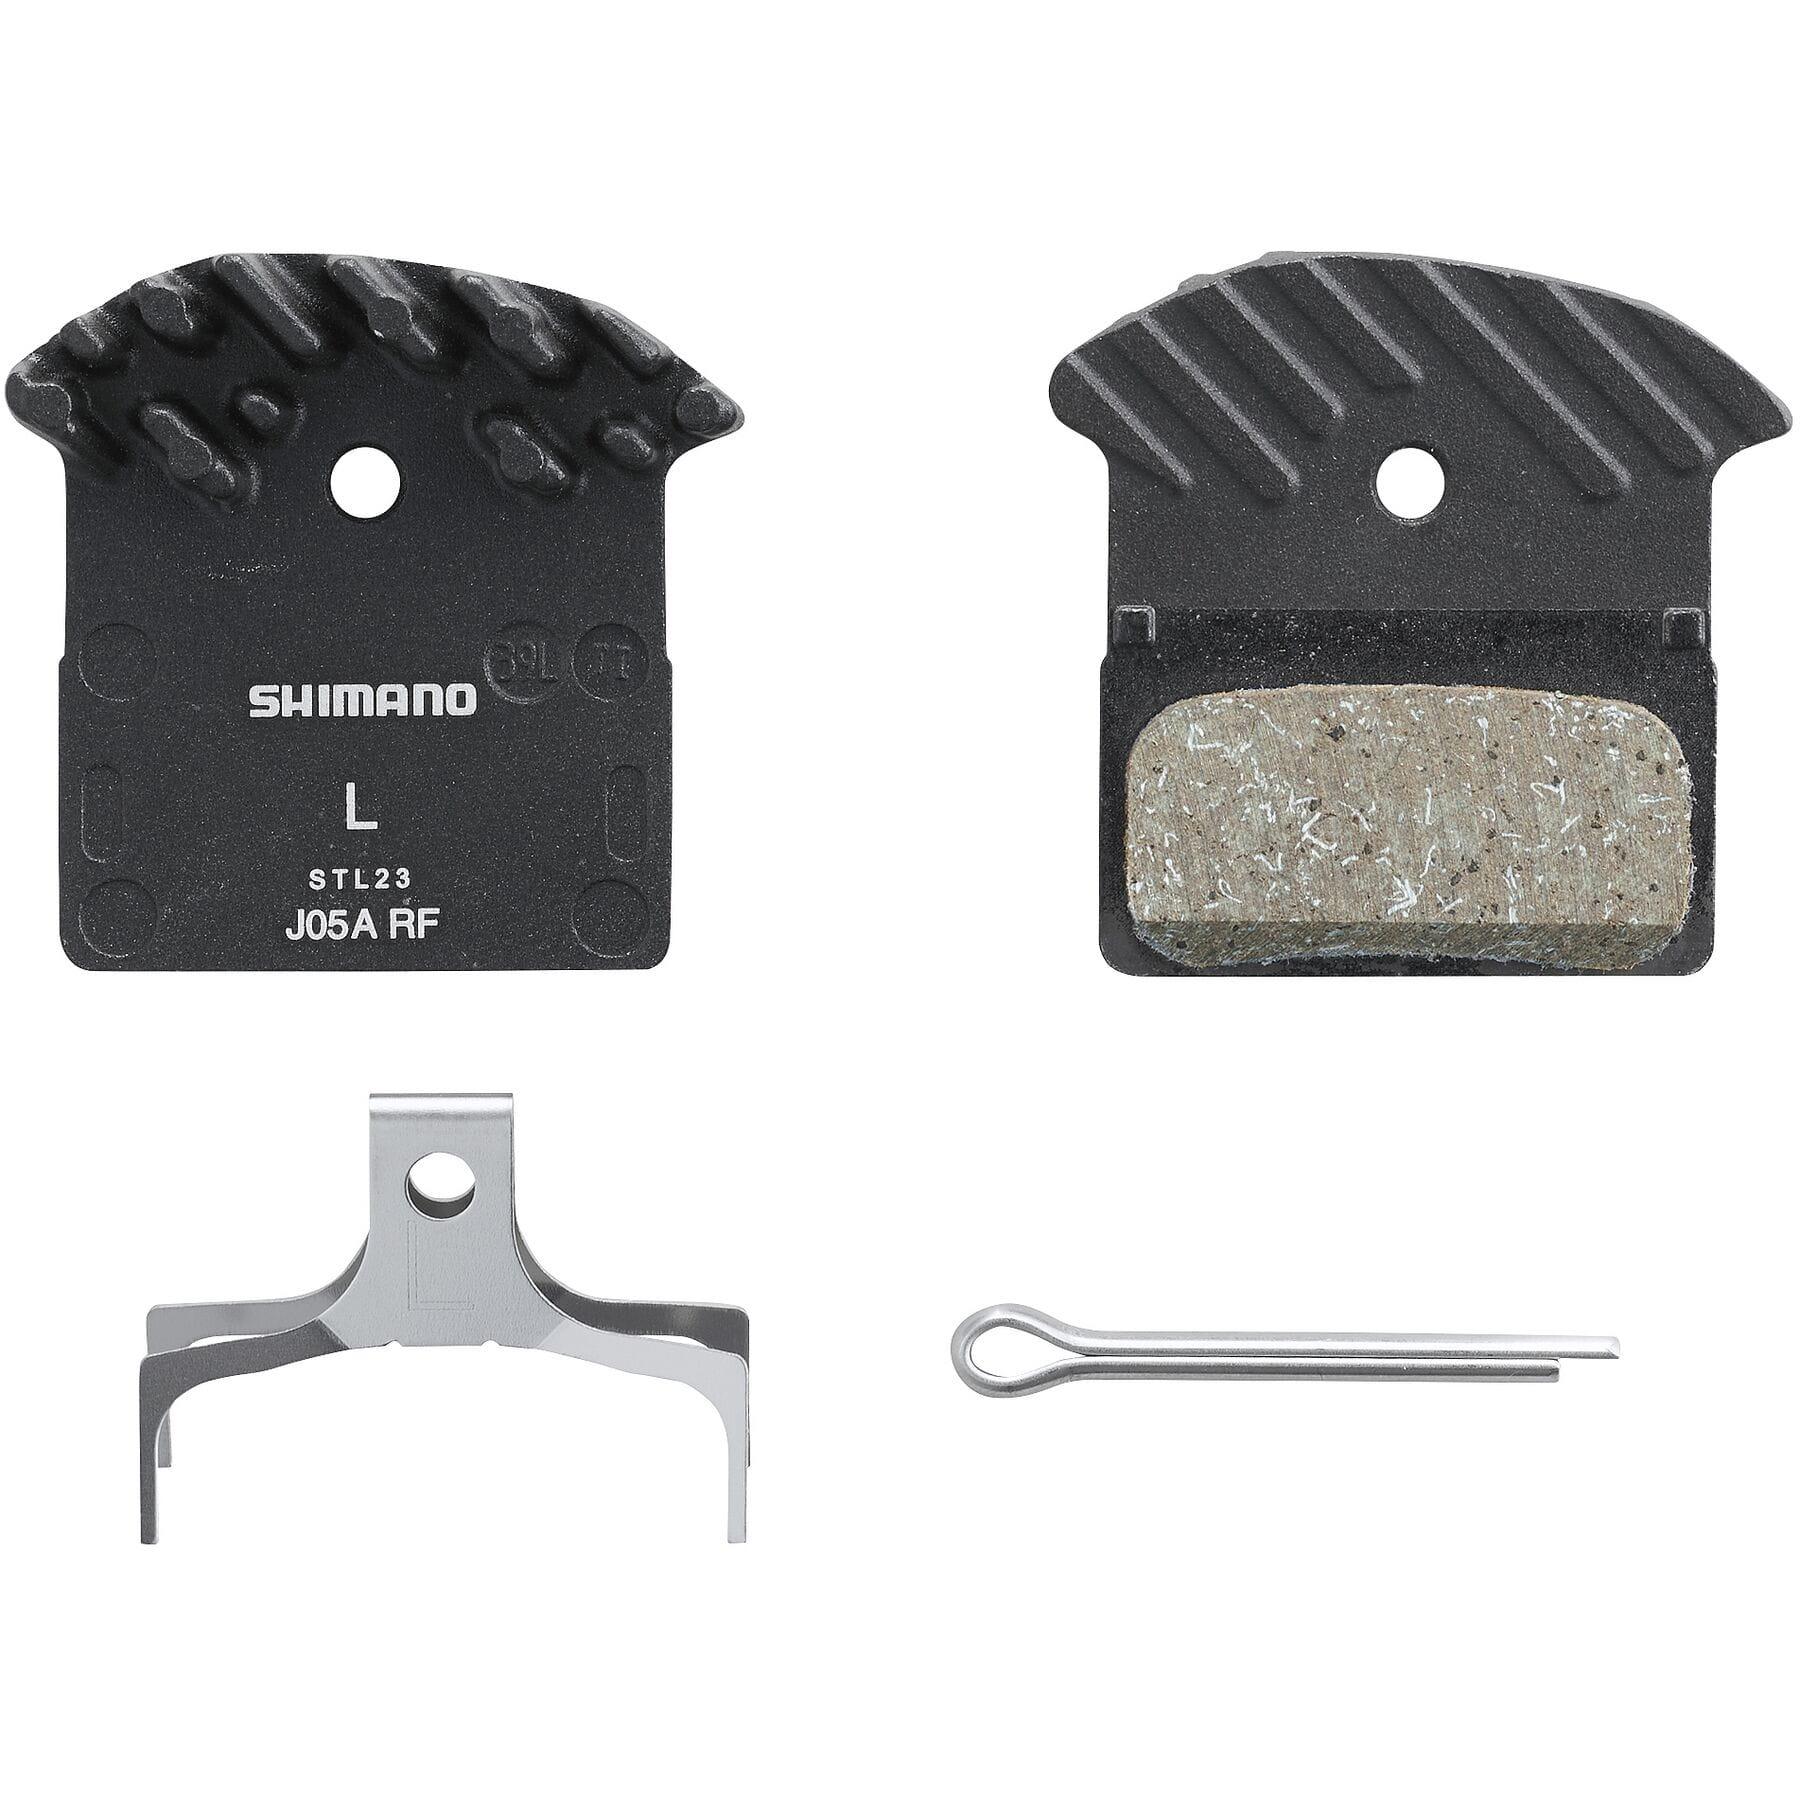 Shimano J05a Resin Slx/xt/xtr Disc Brake Pad With Fins - Black/silver